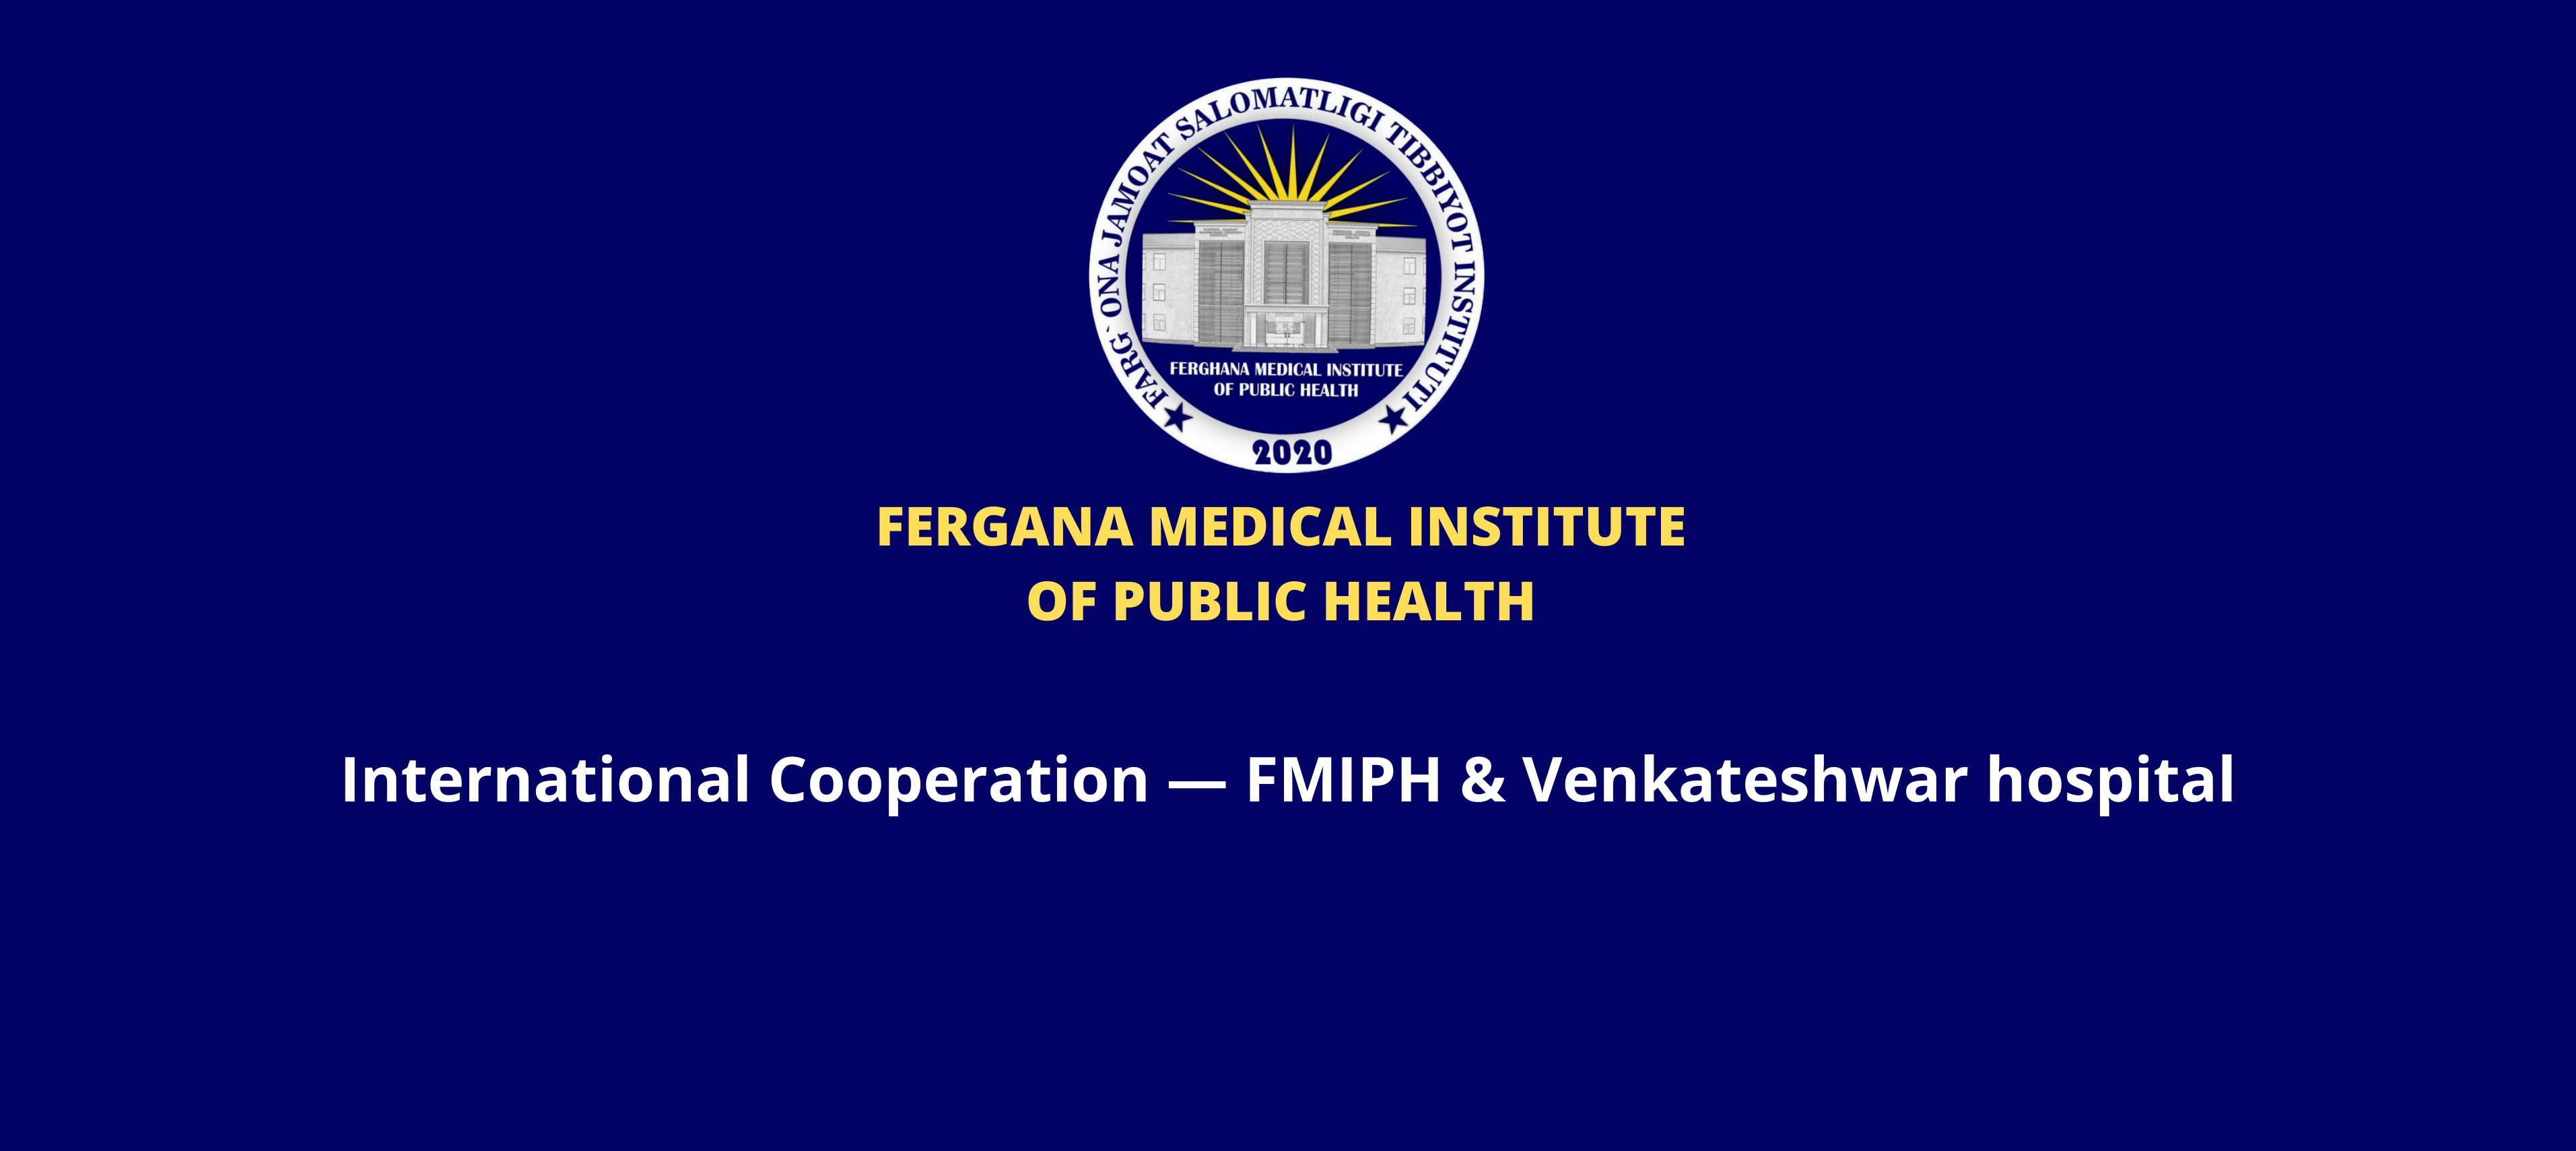 International Cooperation — FMIPH & Venkateshwar hospital